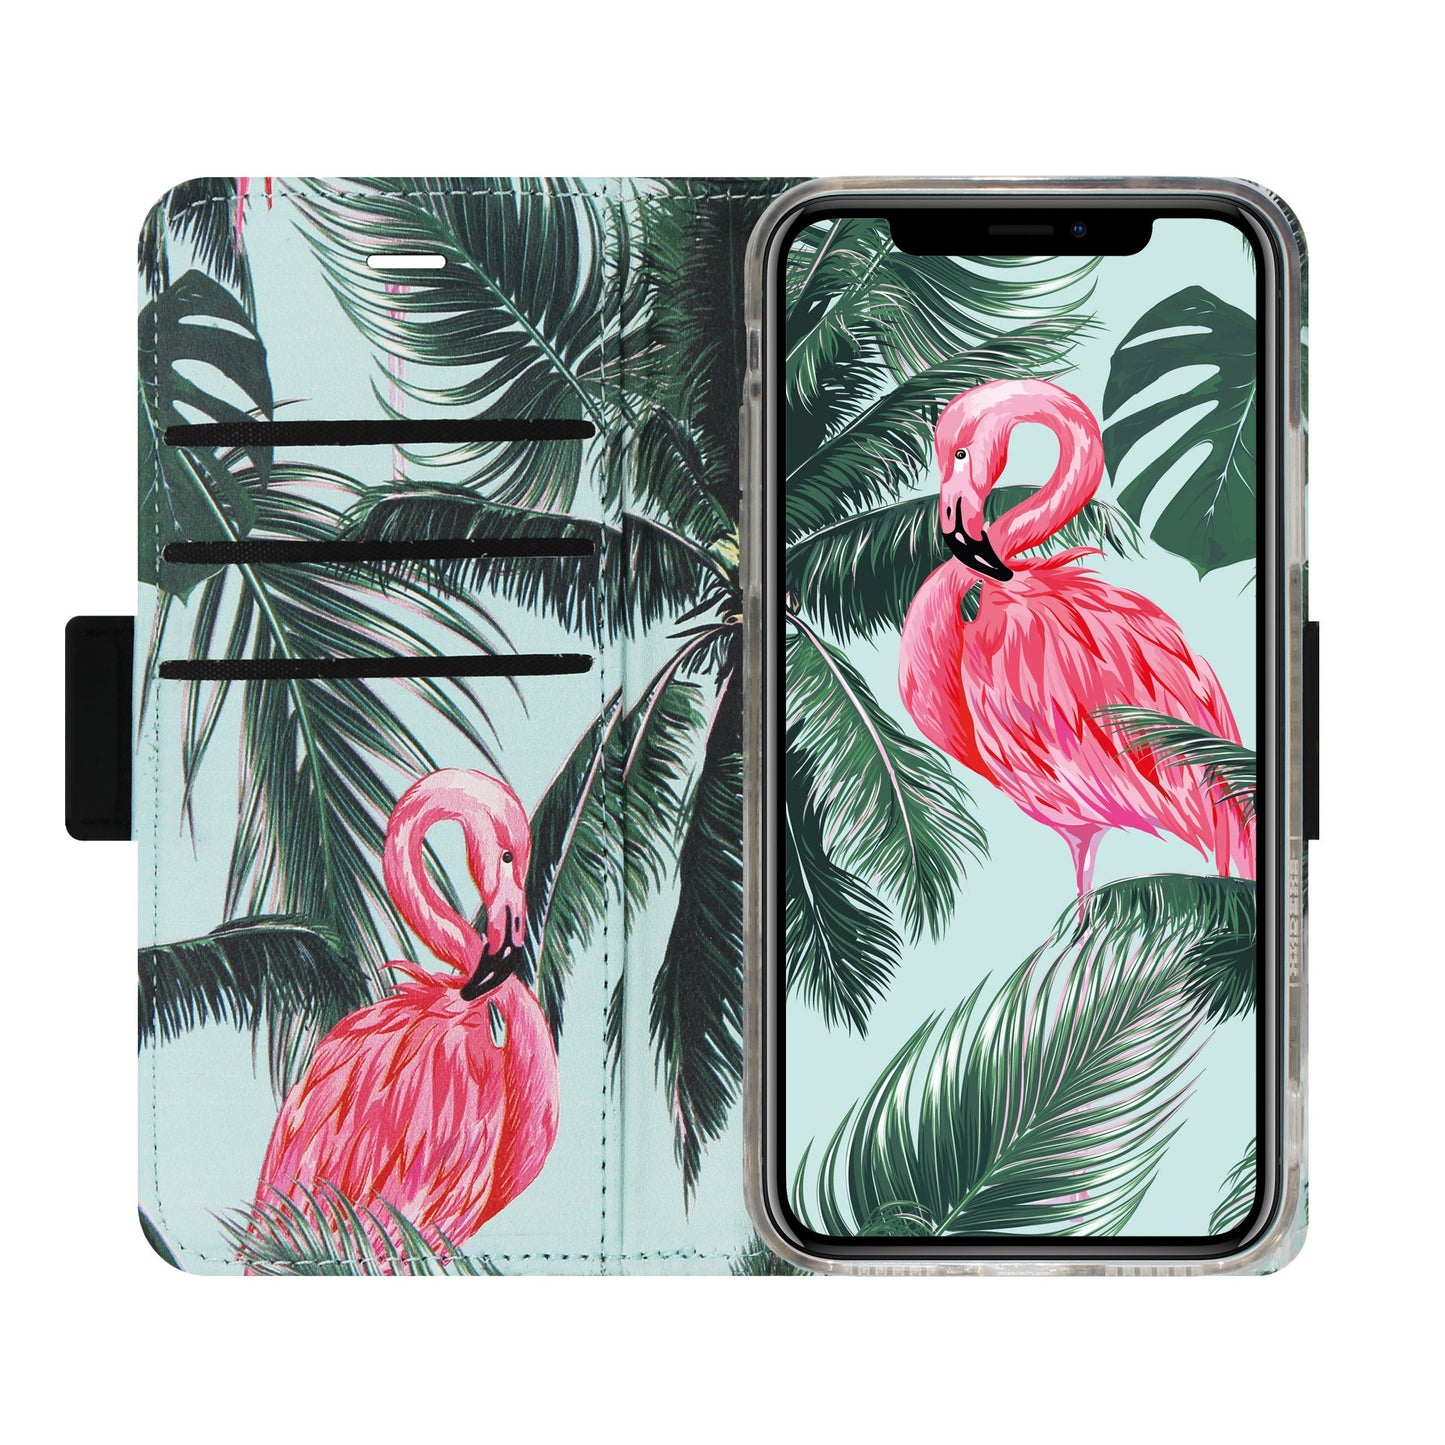 Flamingo Victor Case for iPhone 12 Mini